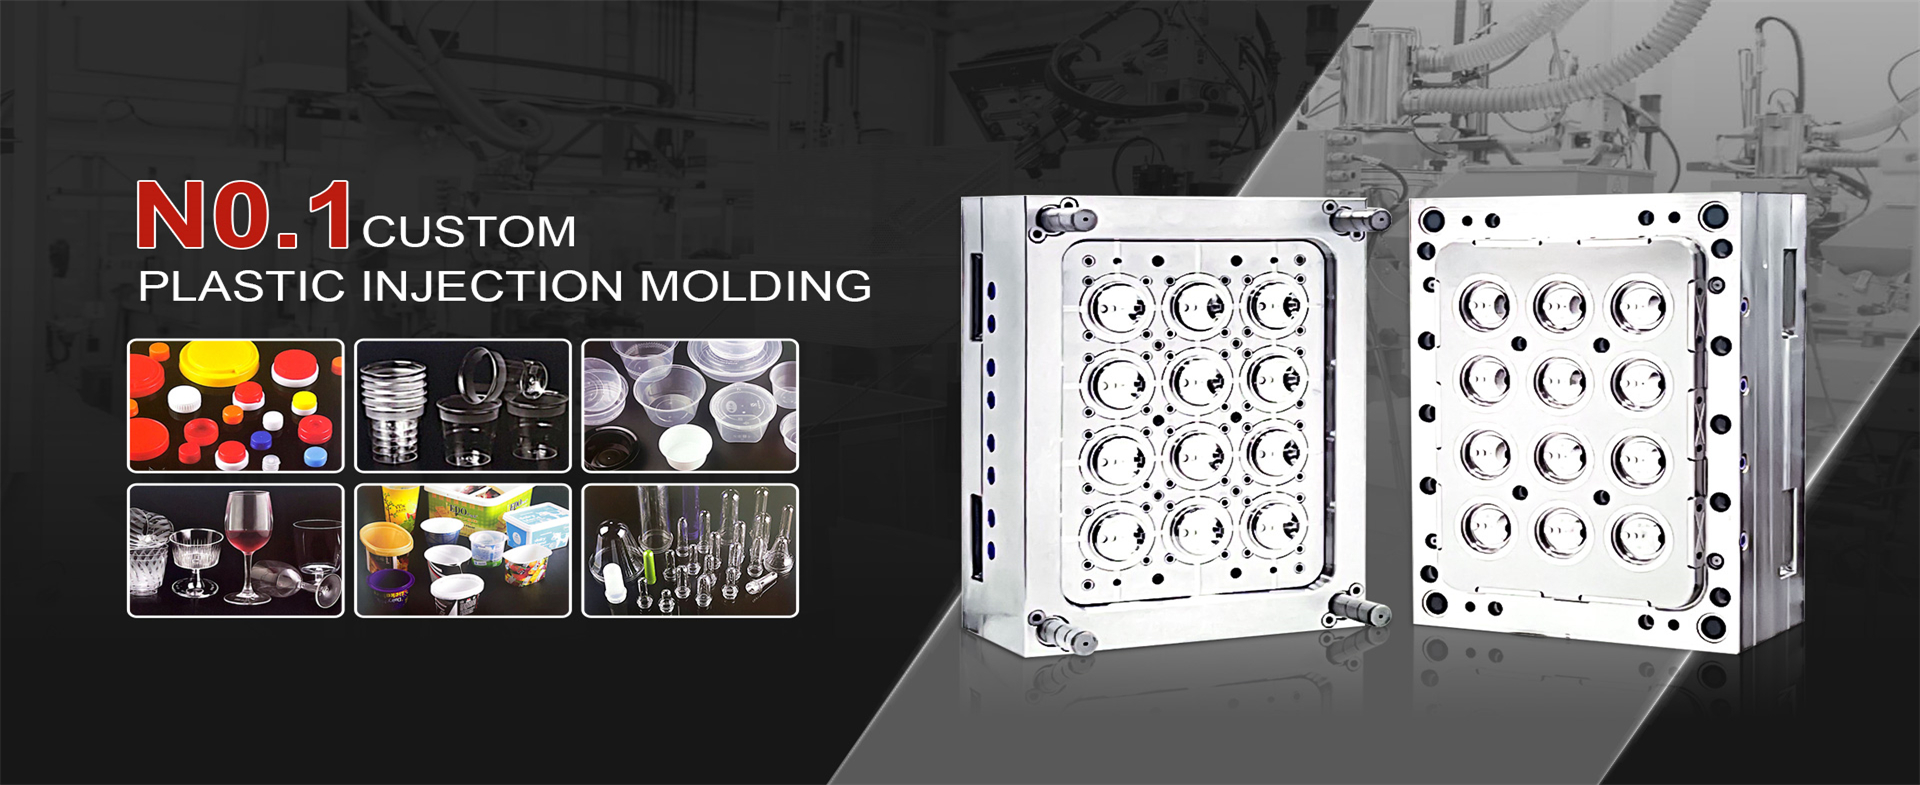 Global Molding Machinery Co., Ltd